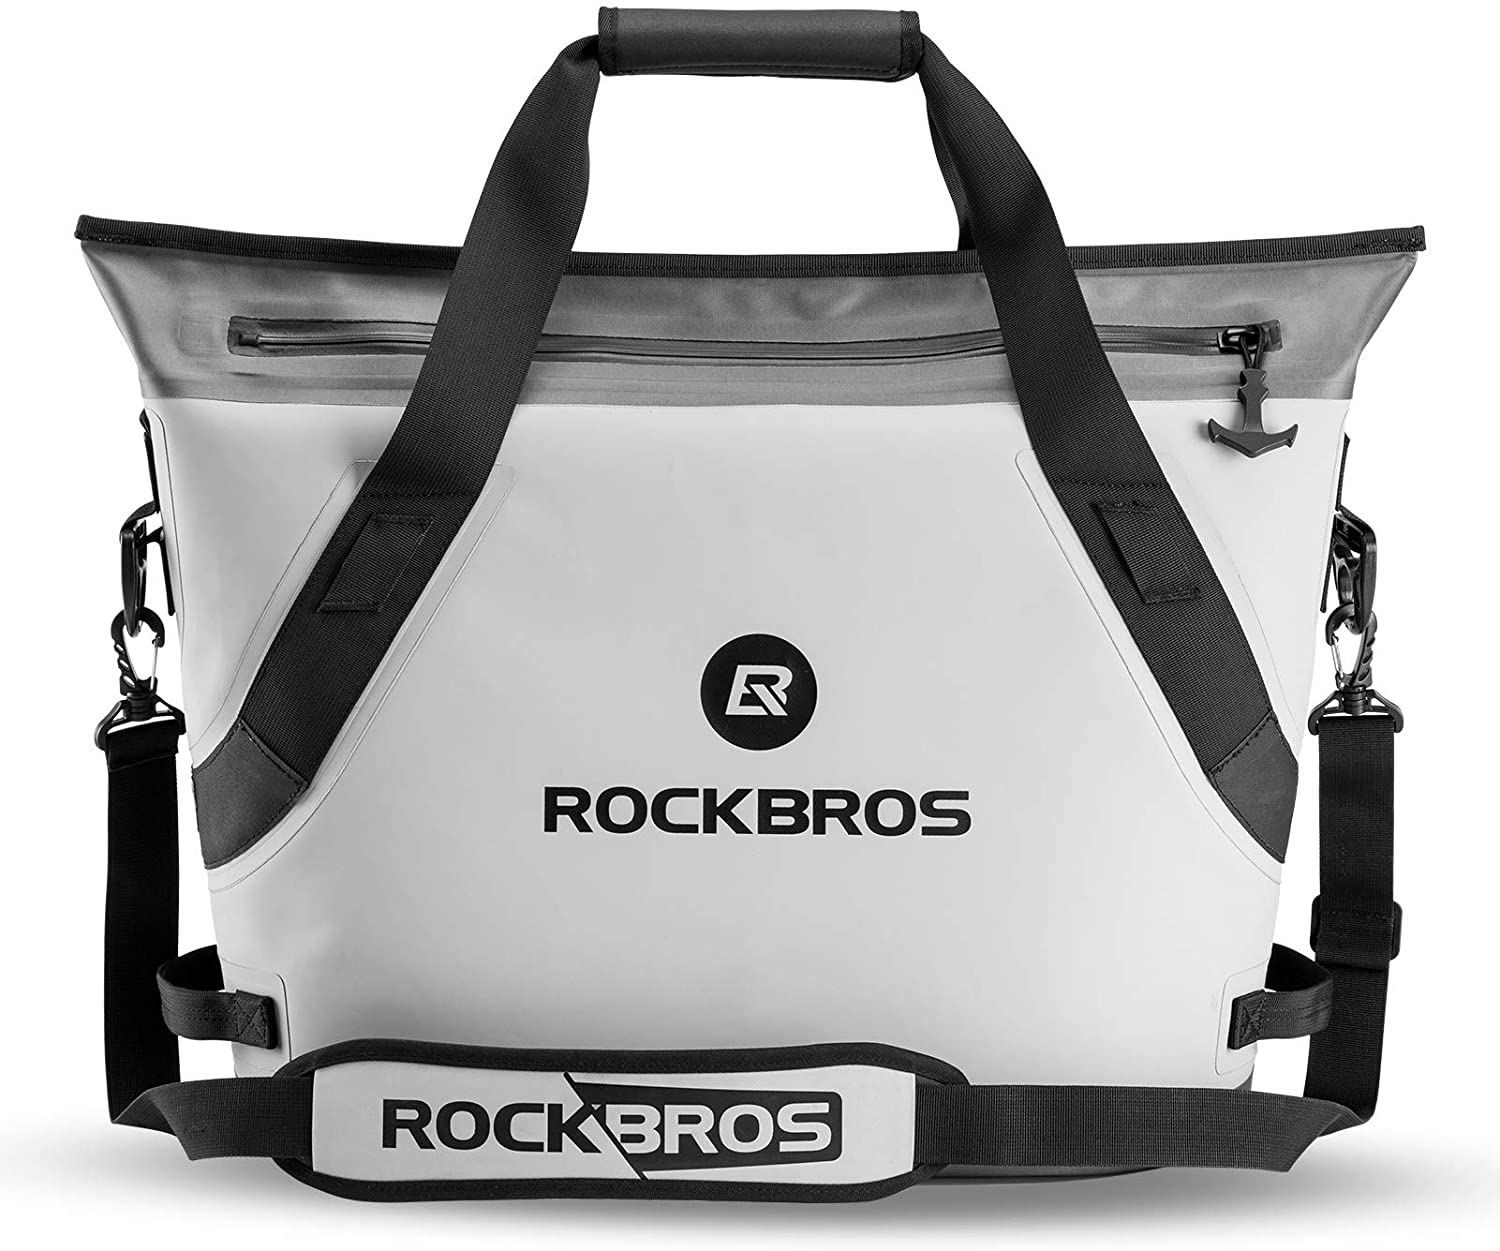 ROCKBROS Soft Cooler Insulated Leak Proof Cooler Bag Portable 36 Can Large